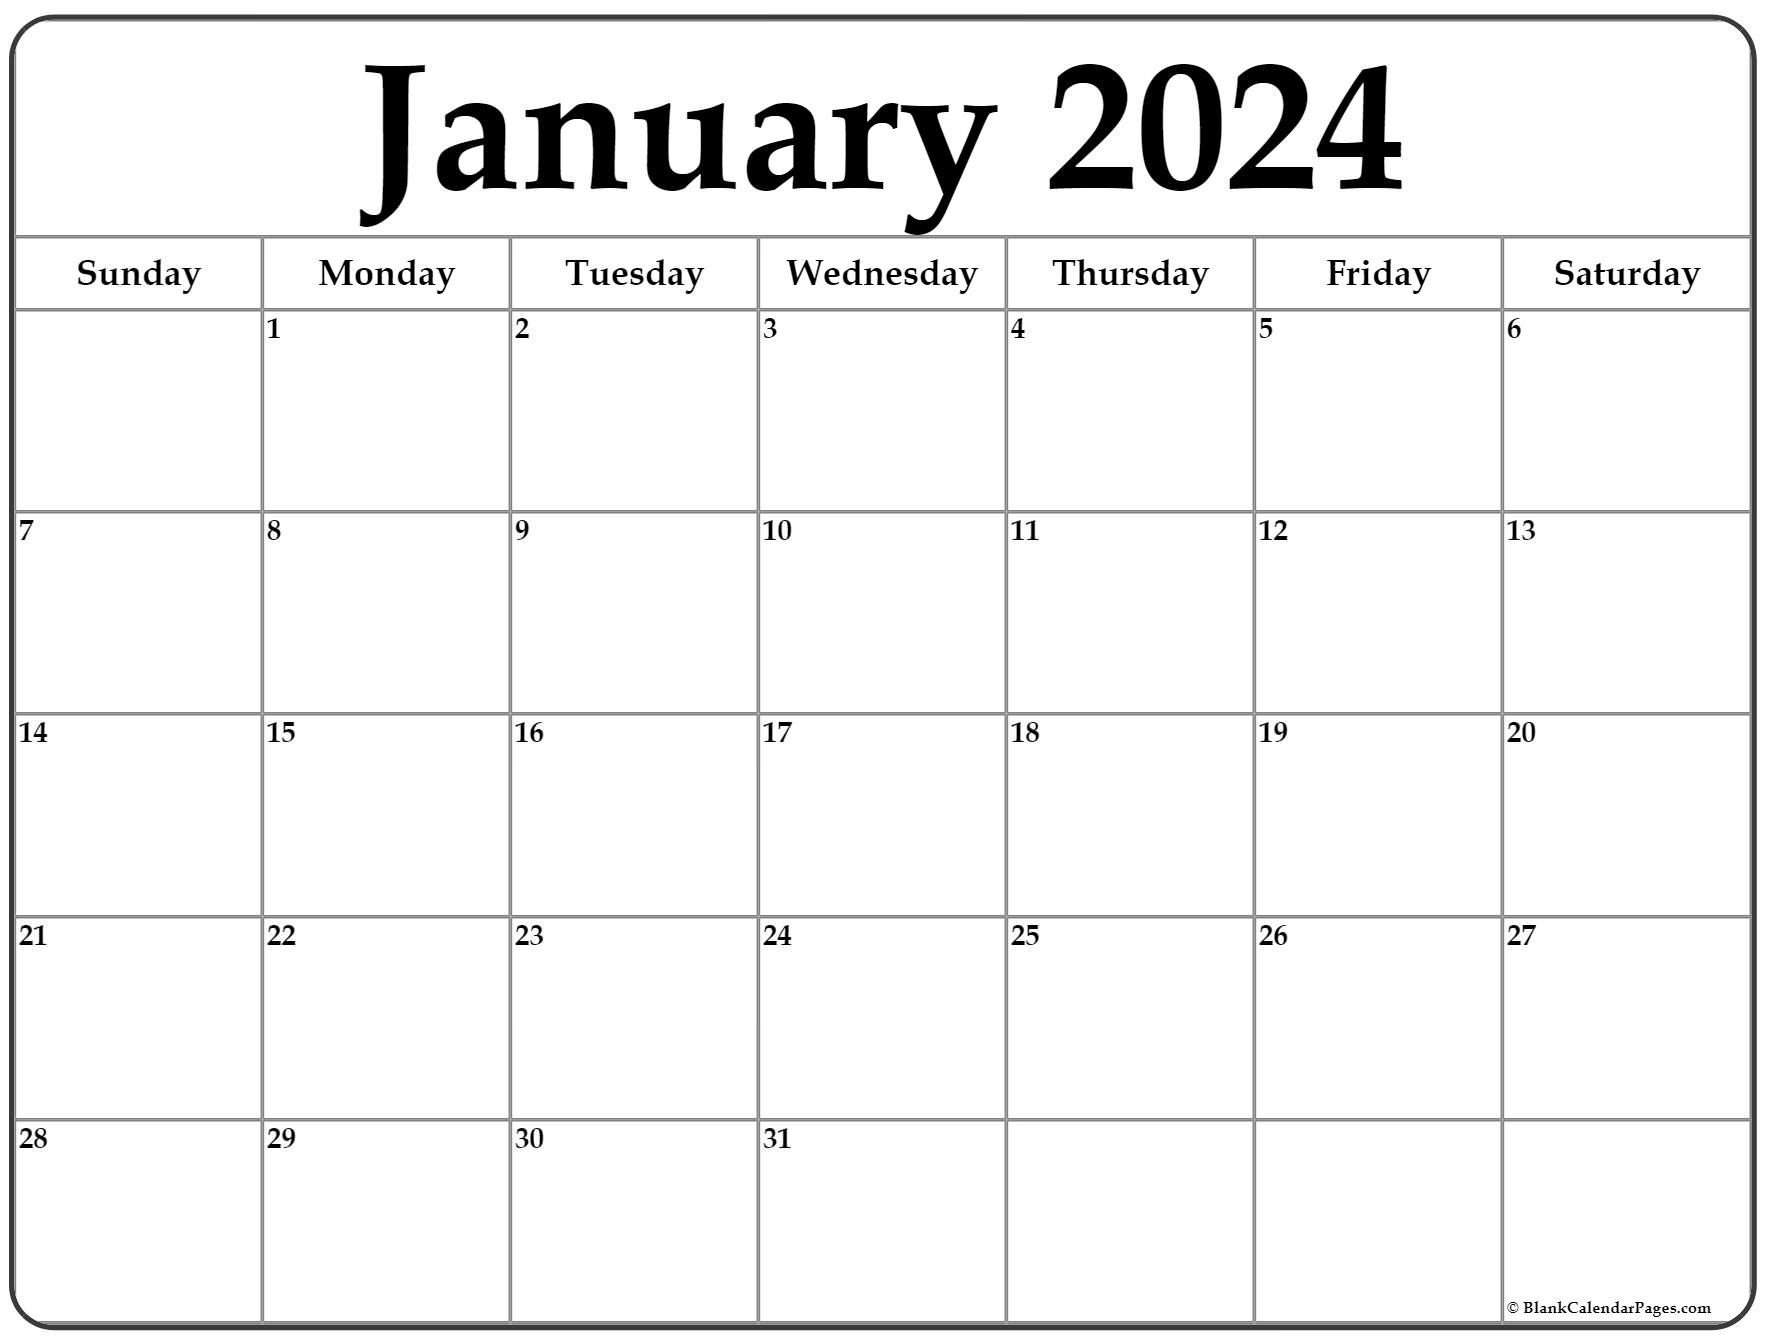 2022 Calendar Sheets Printable.January 2022 Calendar Free Printable Calendar